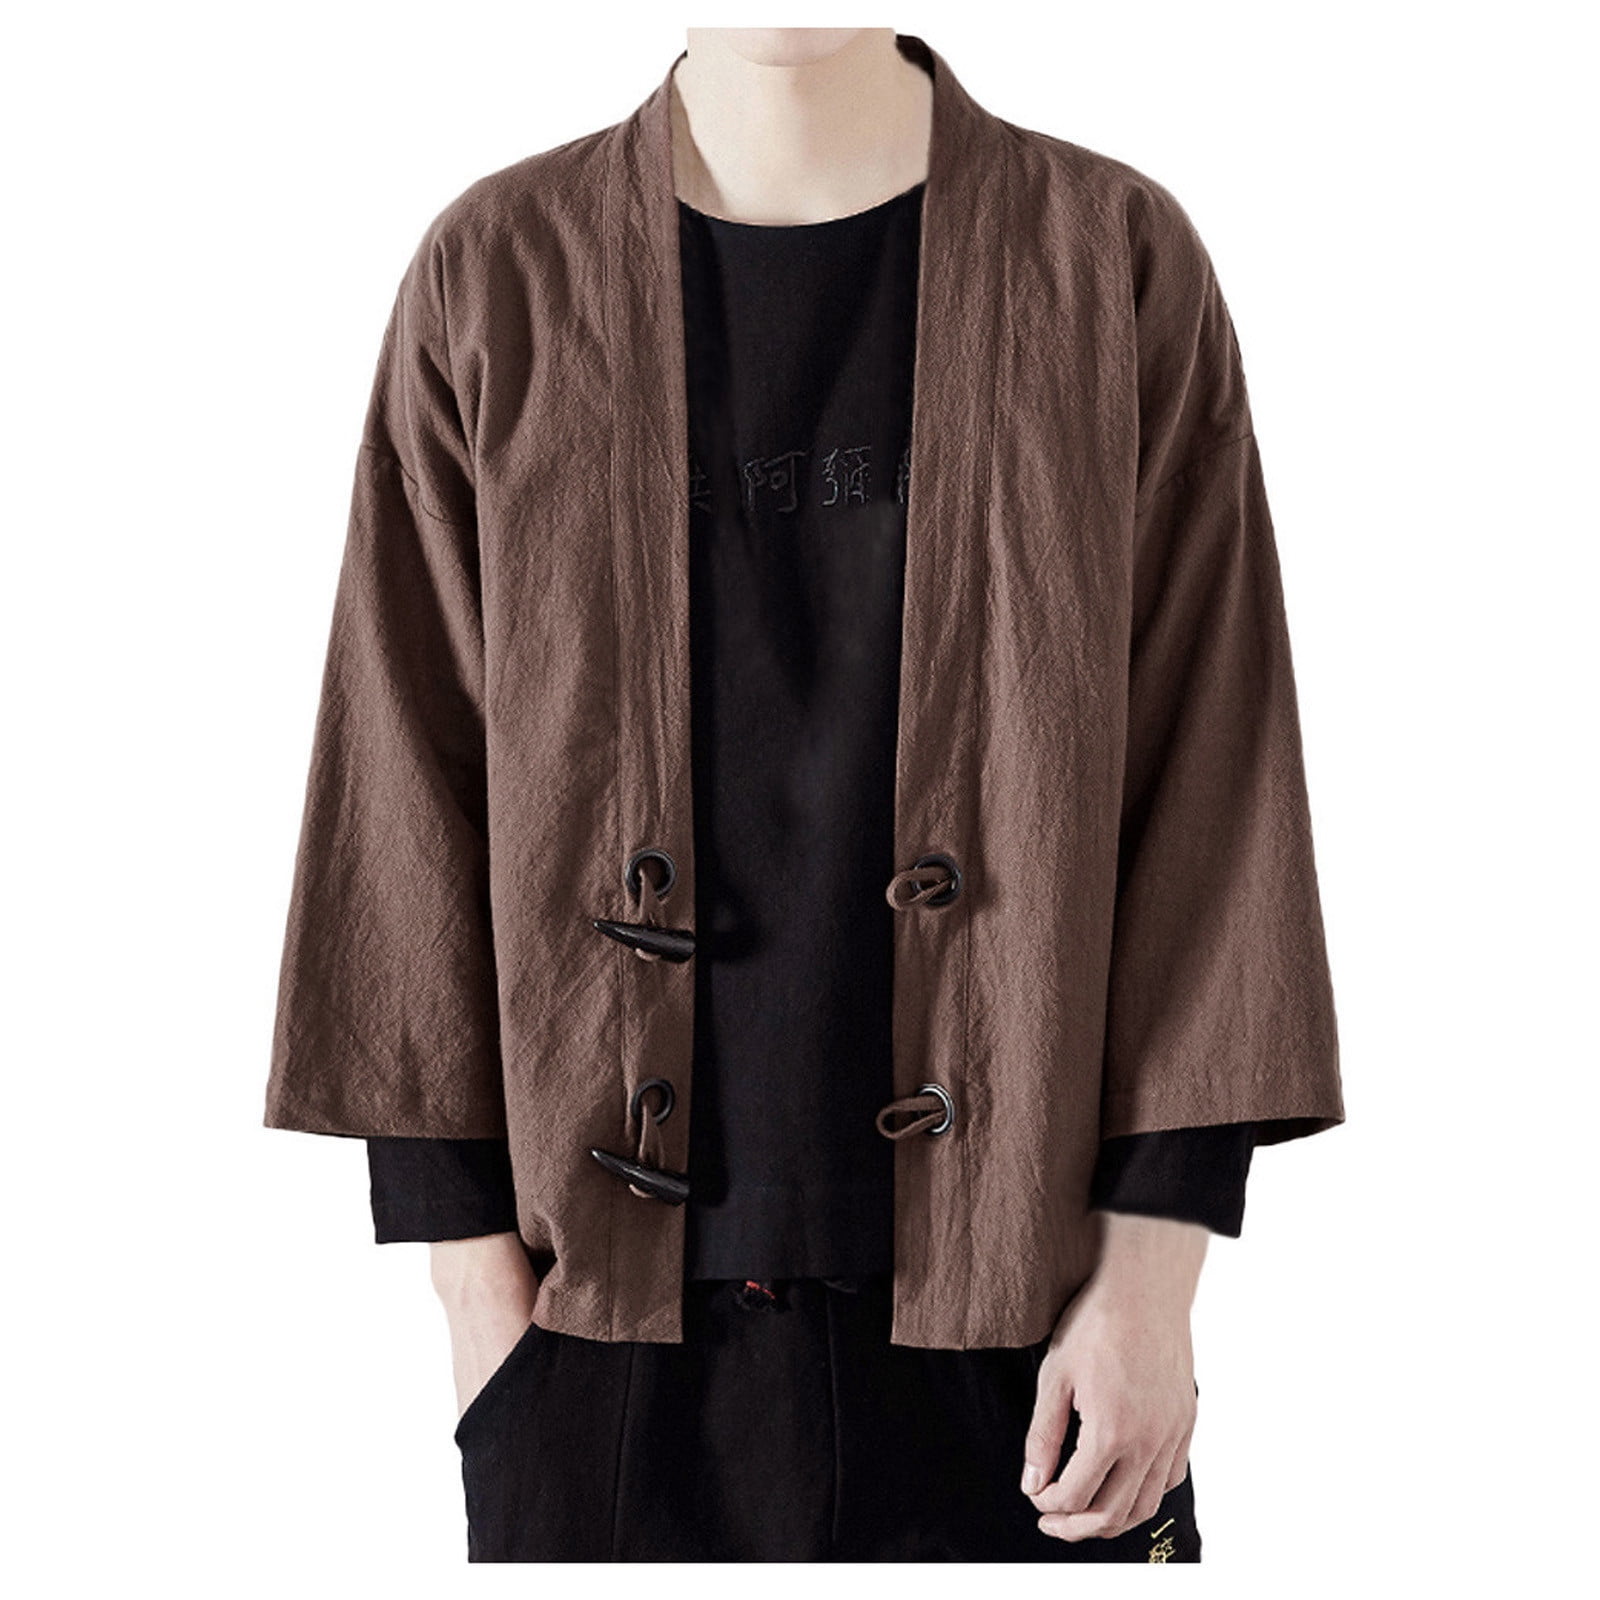 PRIJOUHE Men's Japanese Kimono Cardigan Jackets Casual Long Sleeve Open Front Coat Lightweight Yukata Outwear 